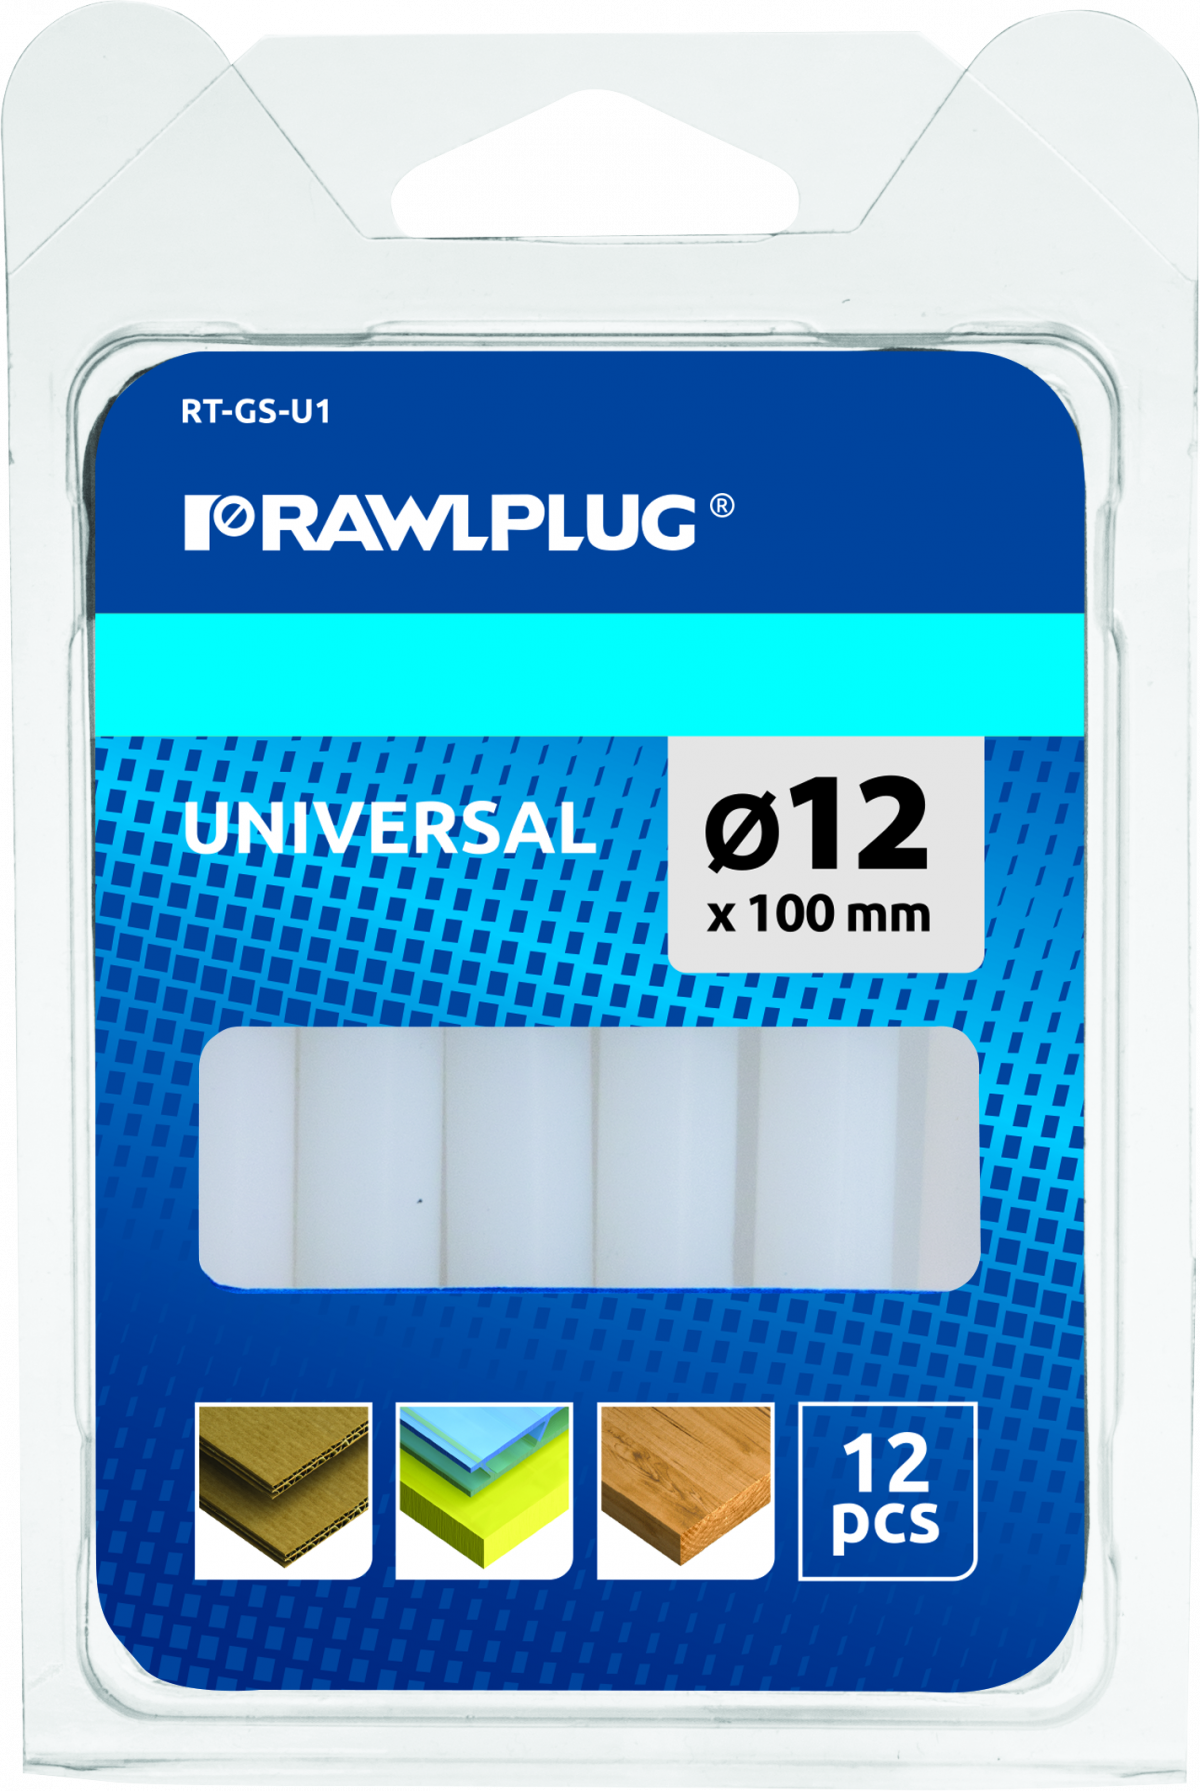 RT-GS-U Universal glue sticks